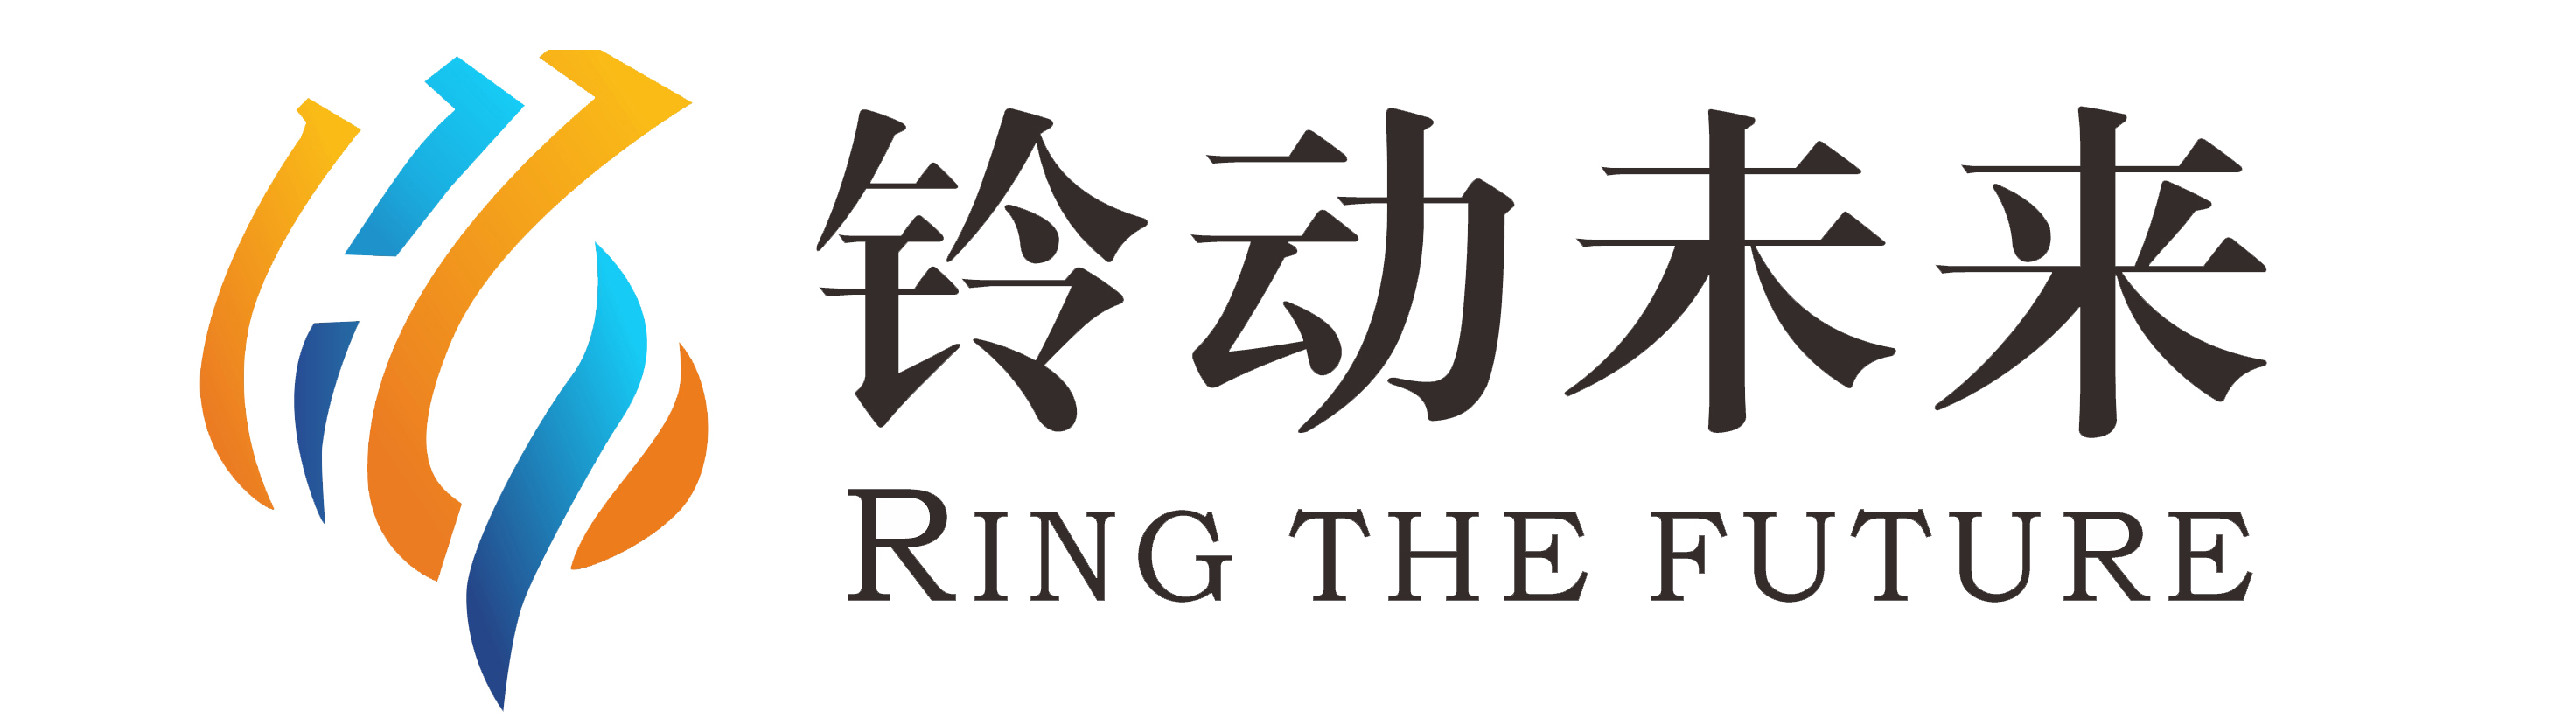 企业彩铃-logo